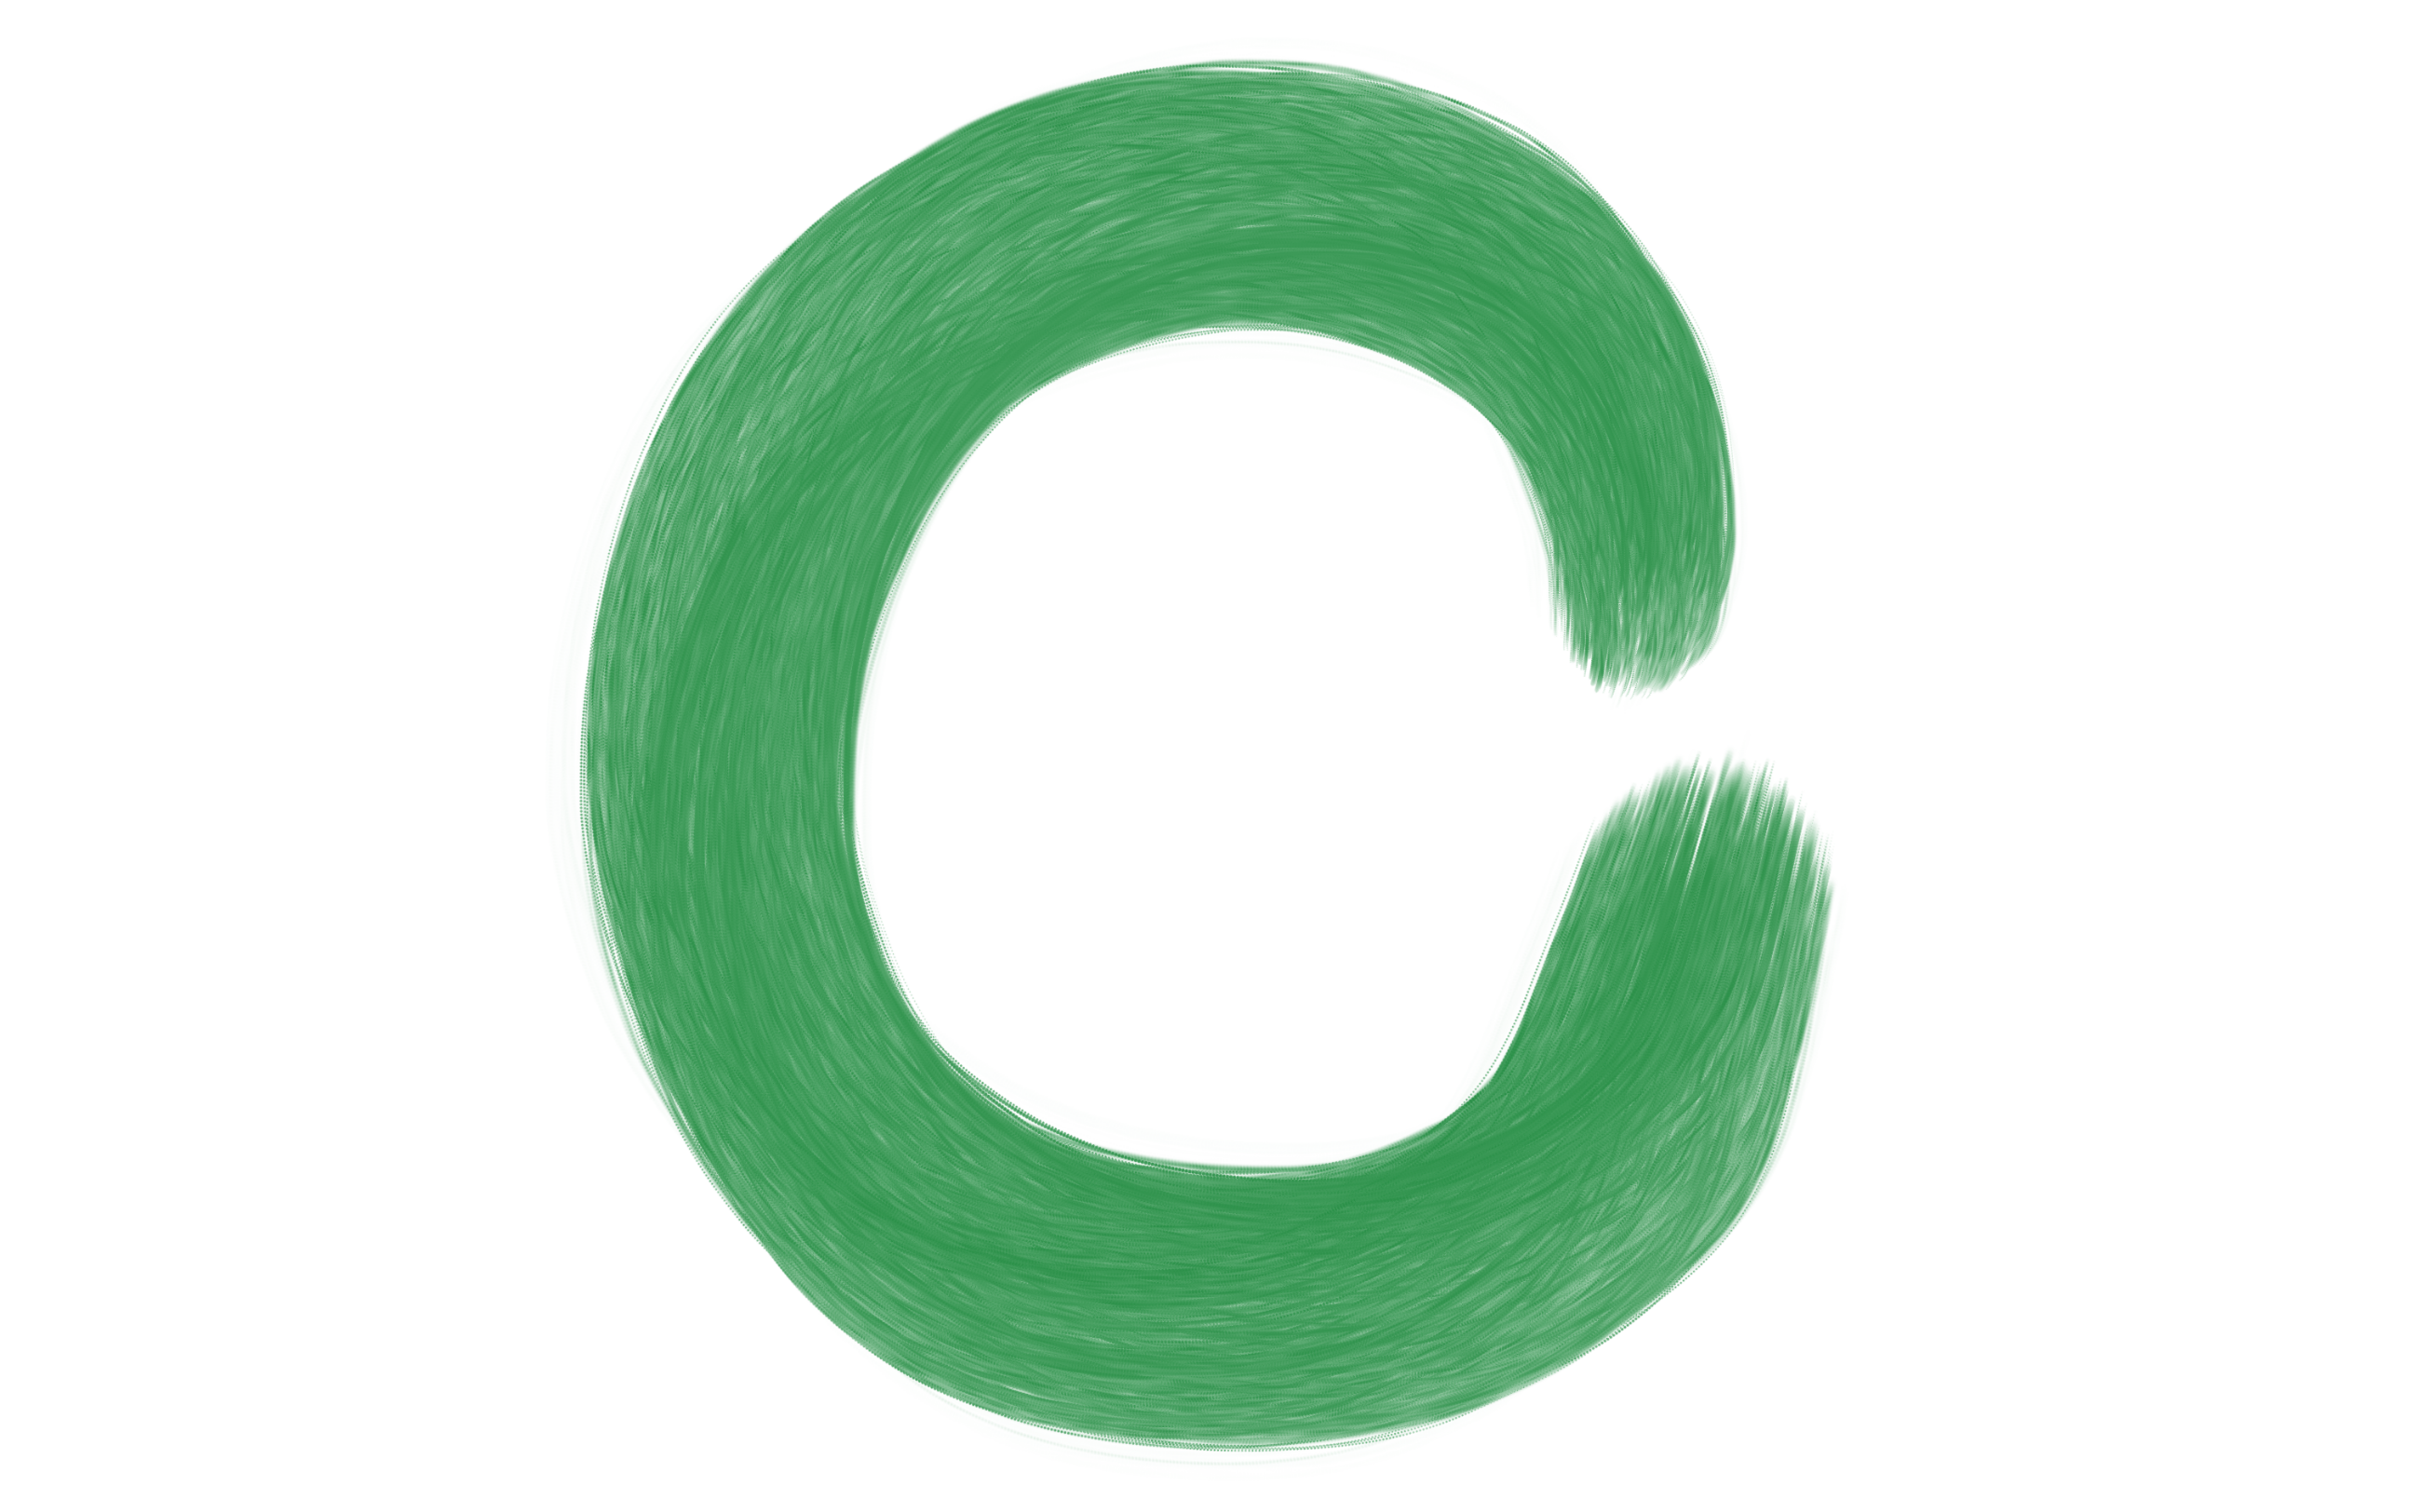 Morning Circle logo: a green letter C shaped like a zen Enso